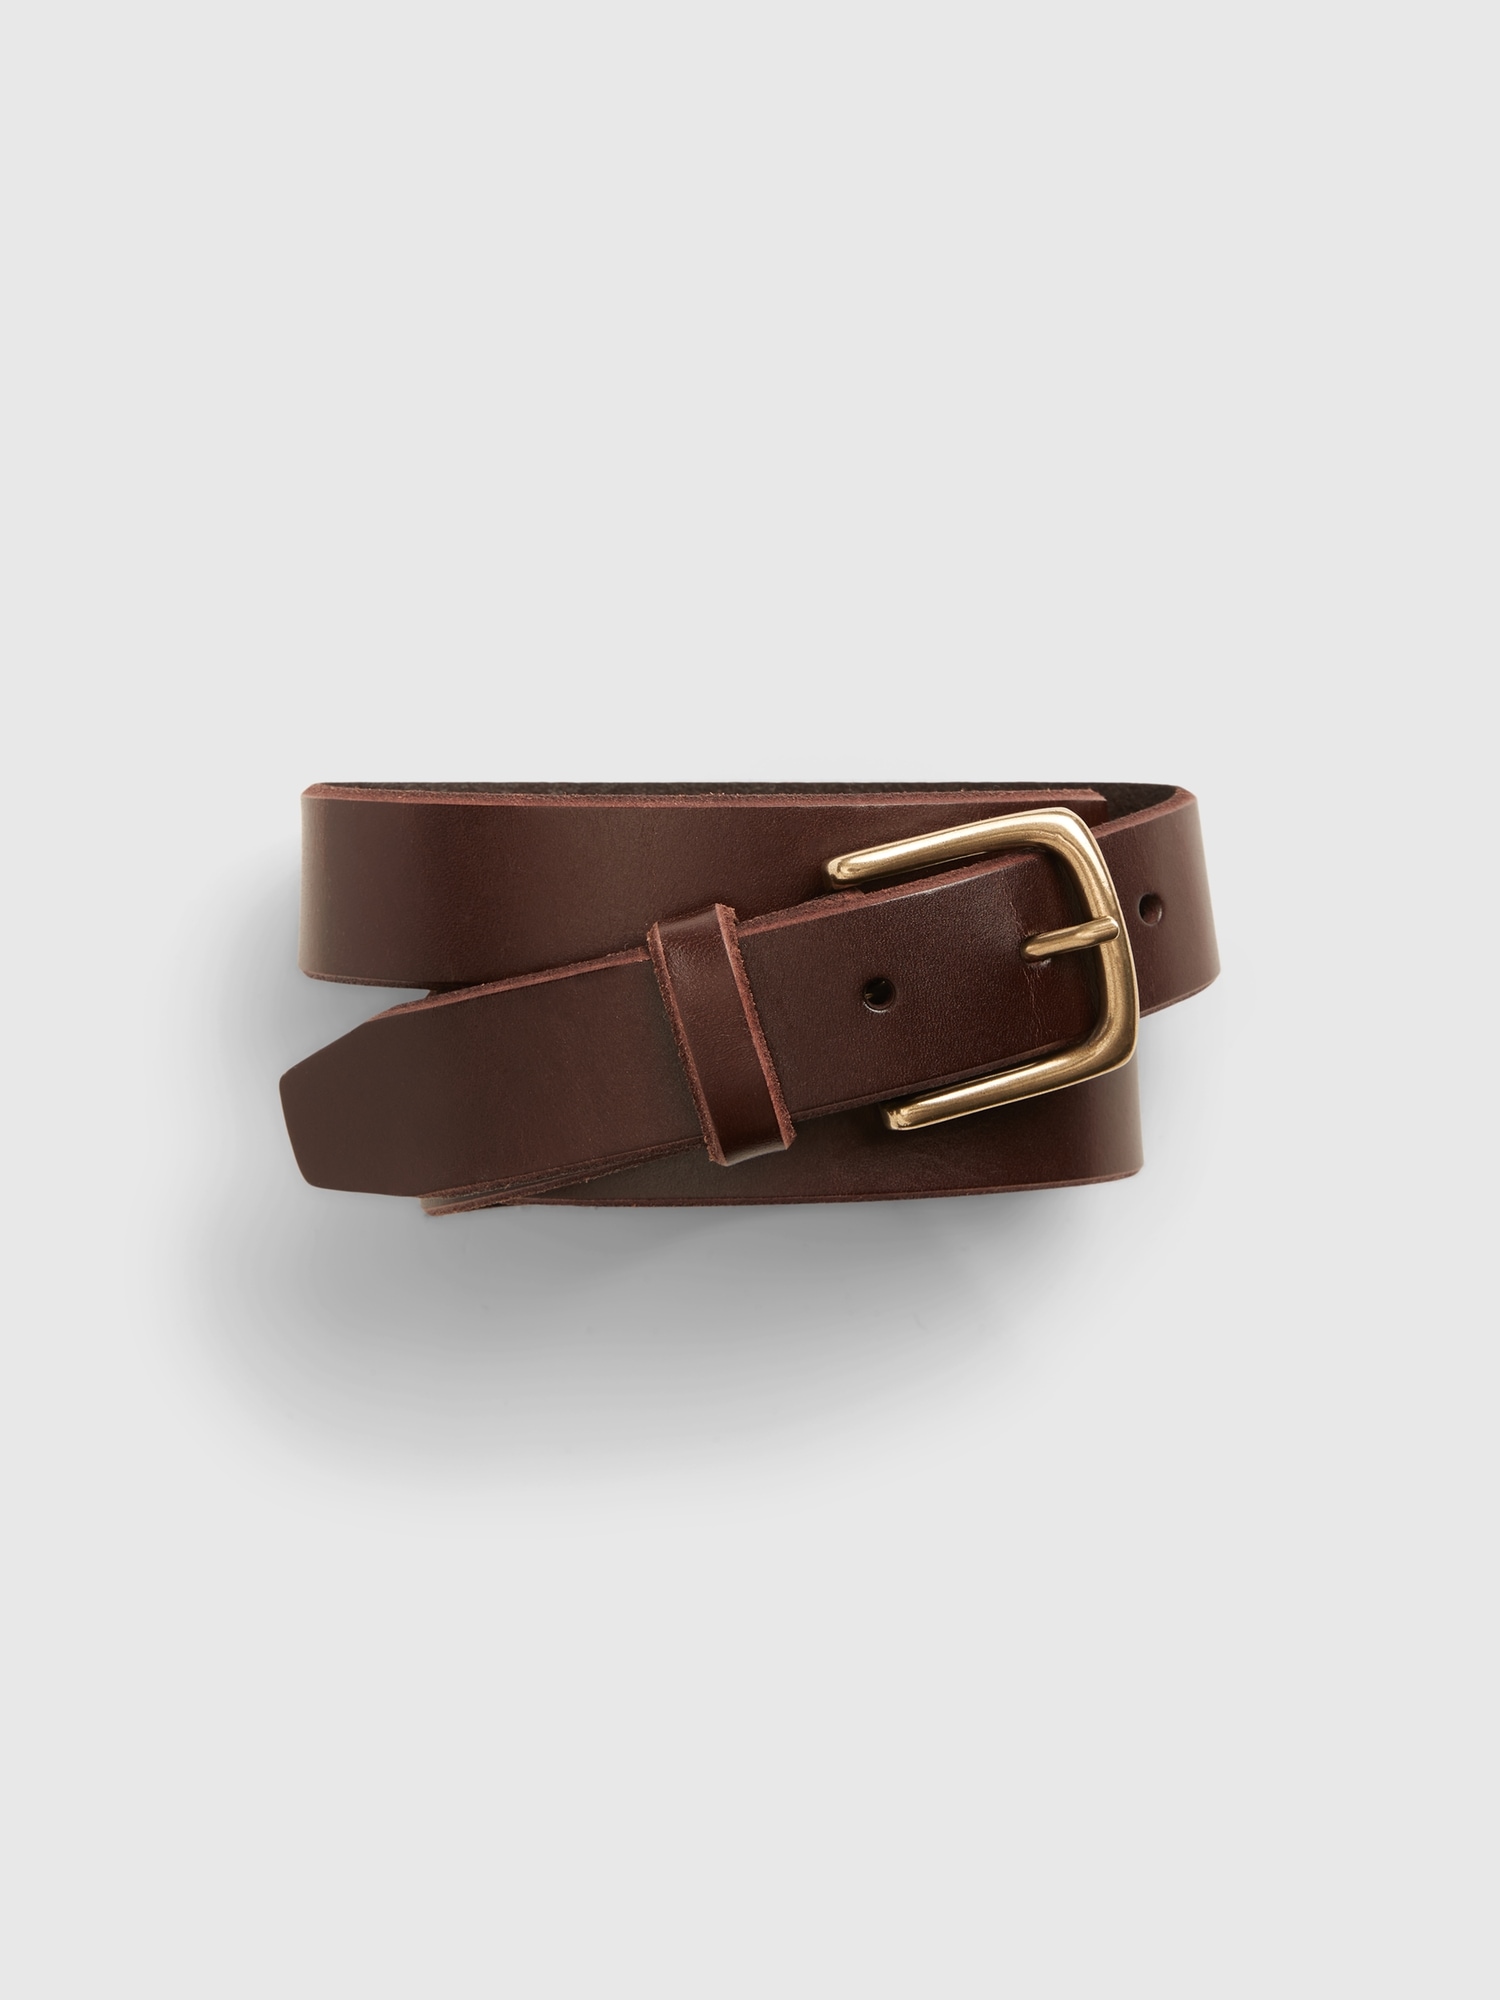 Gap Leather Belt brown. 1